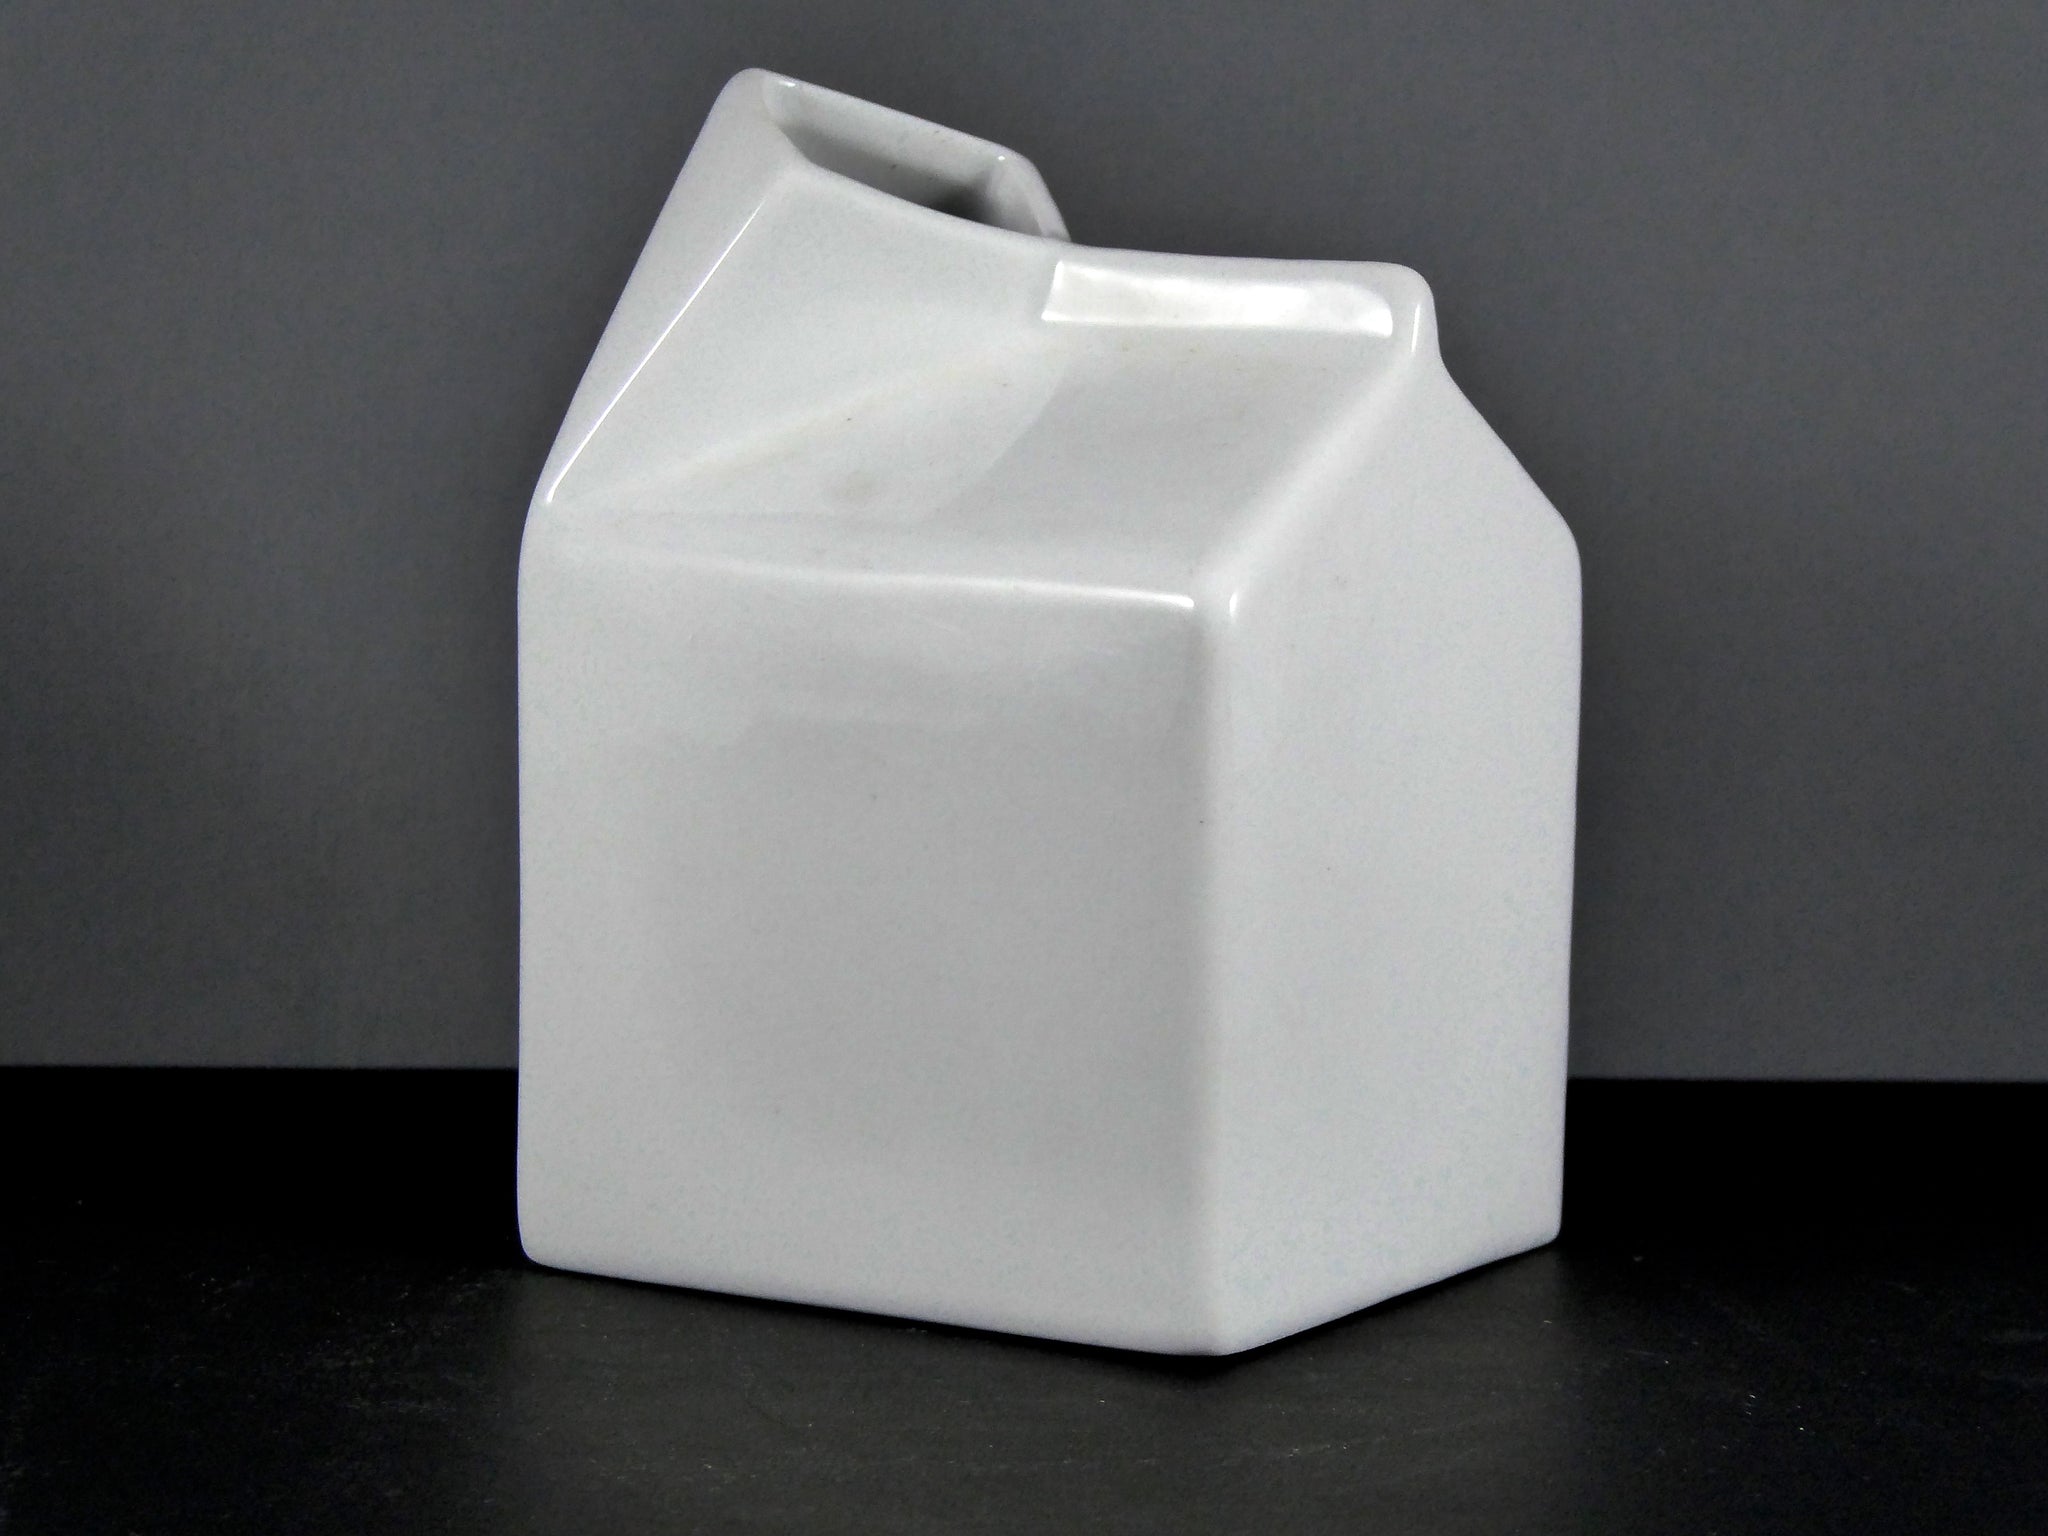 12 oz Clear Glass Milk Carton - 3 1/4 x 2 3/4 x 4 - 1 count box